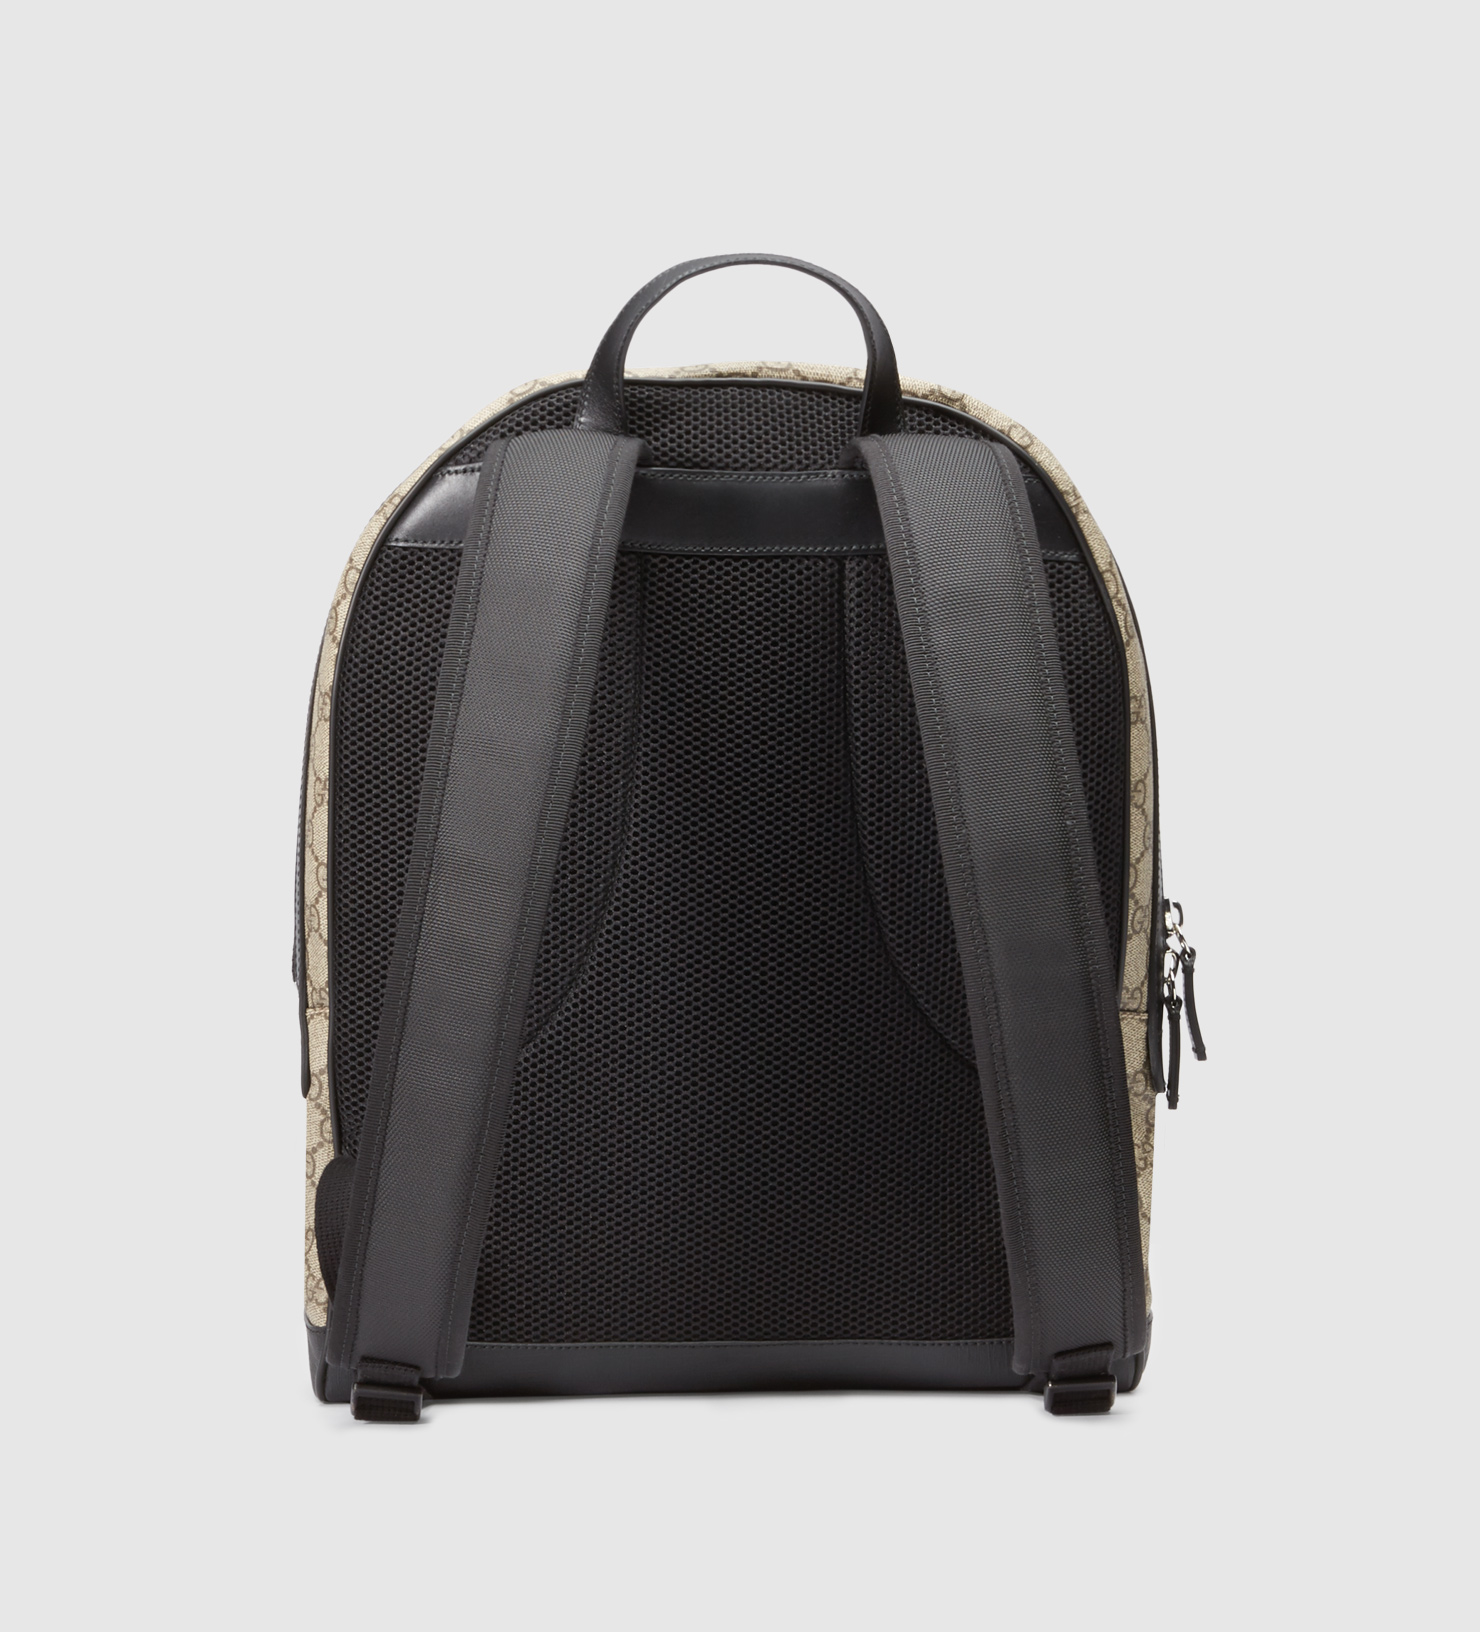 Lyst - Gucci Gg Supreme Backpack in Black for Men